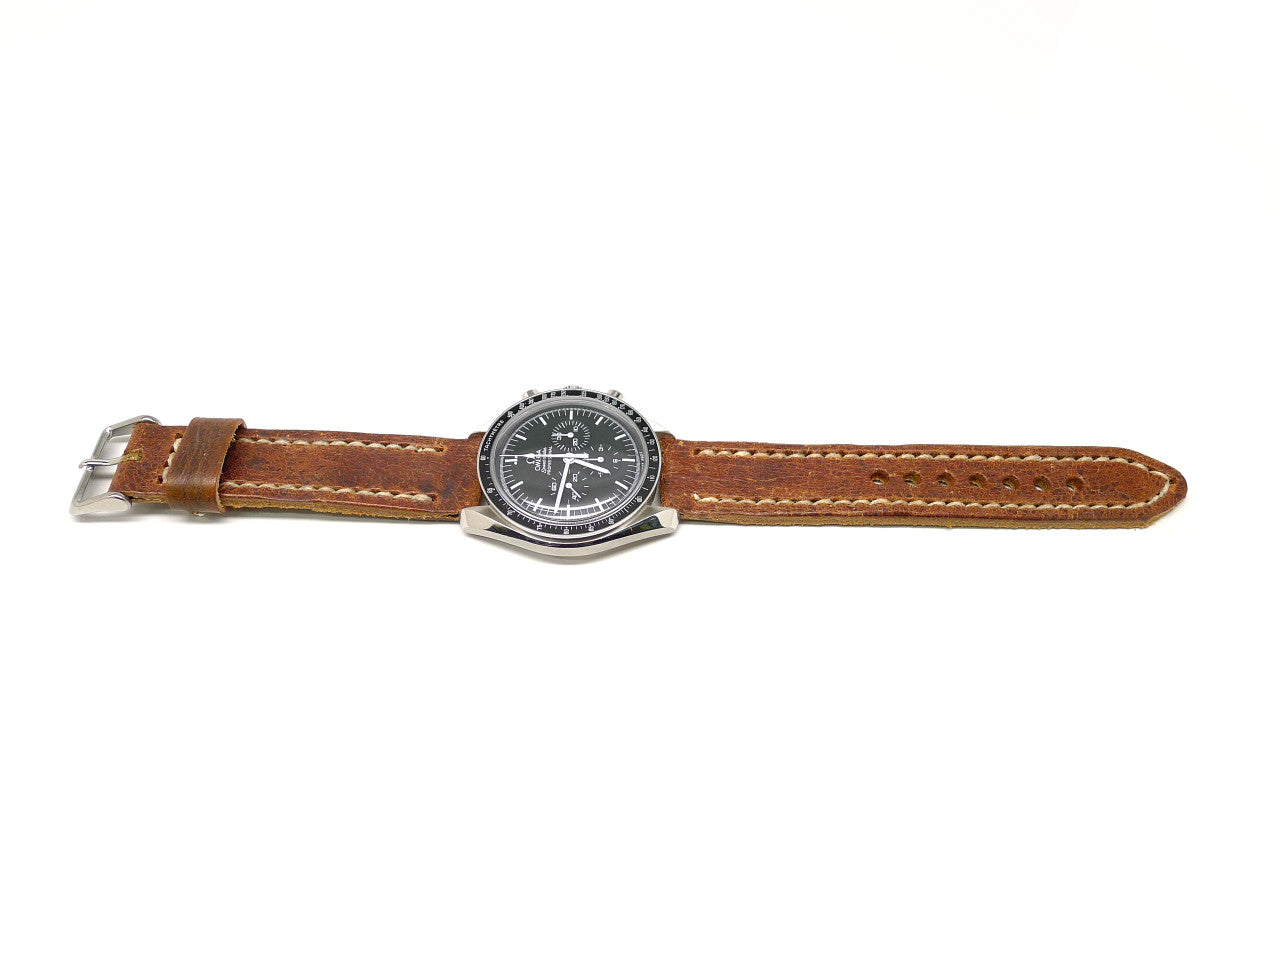 Plentosic Watch Strap - 20mm